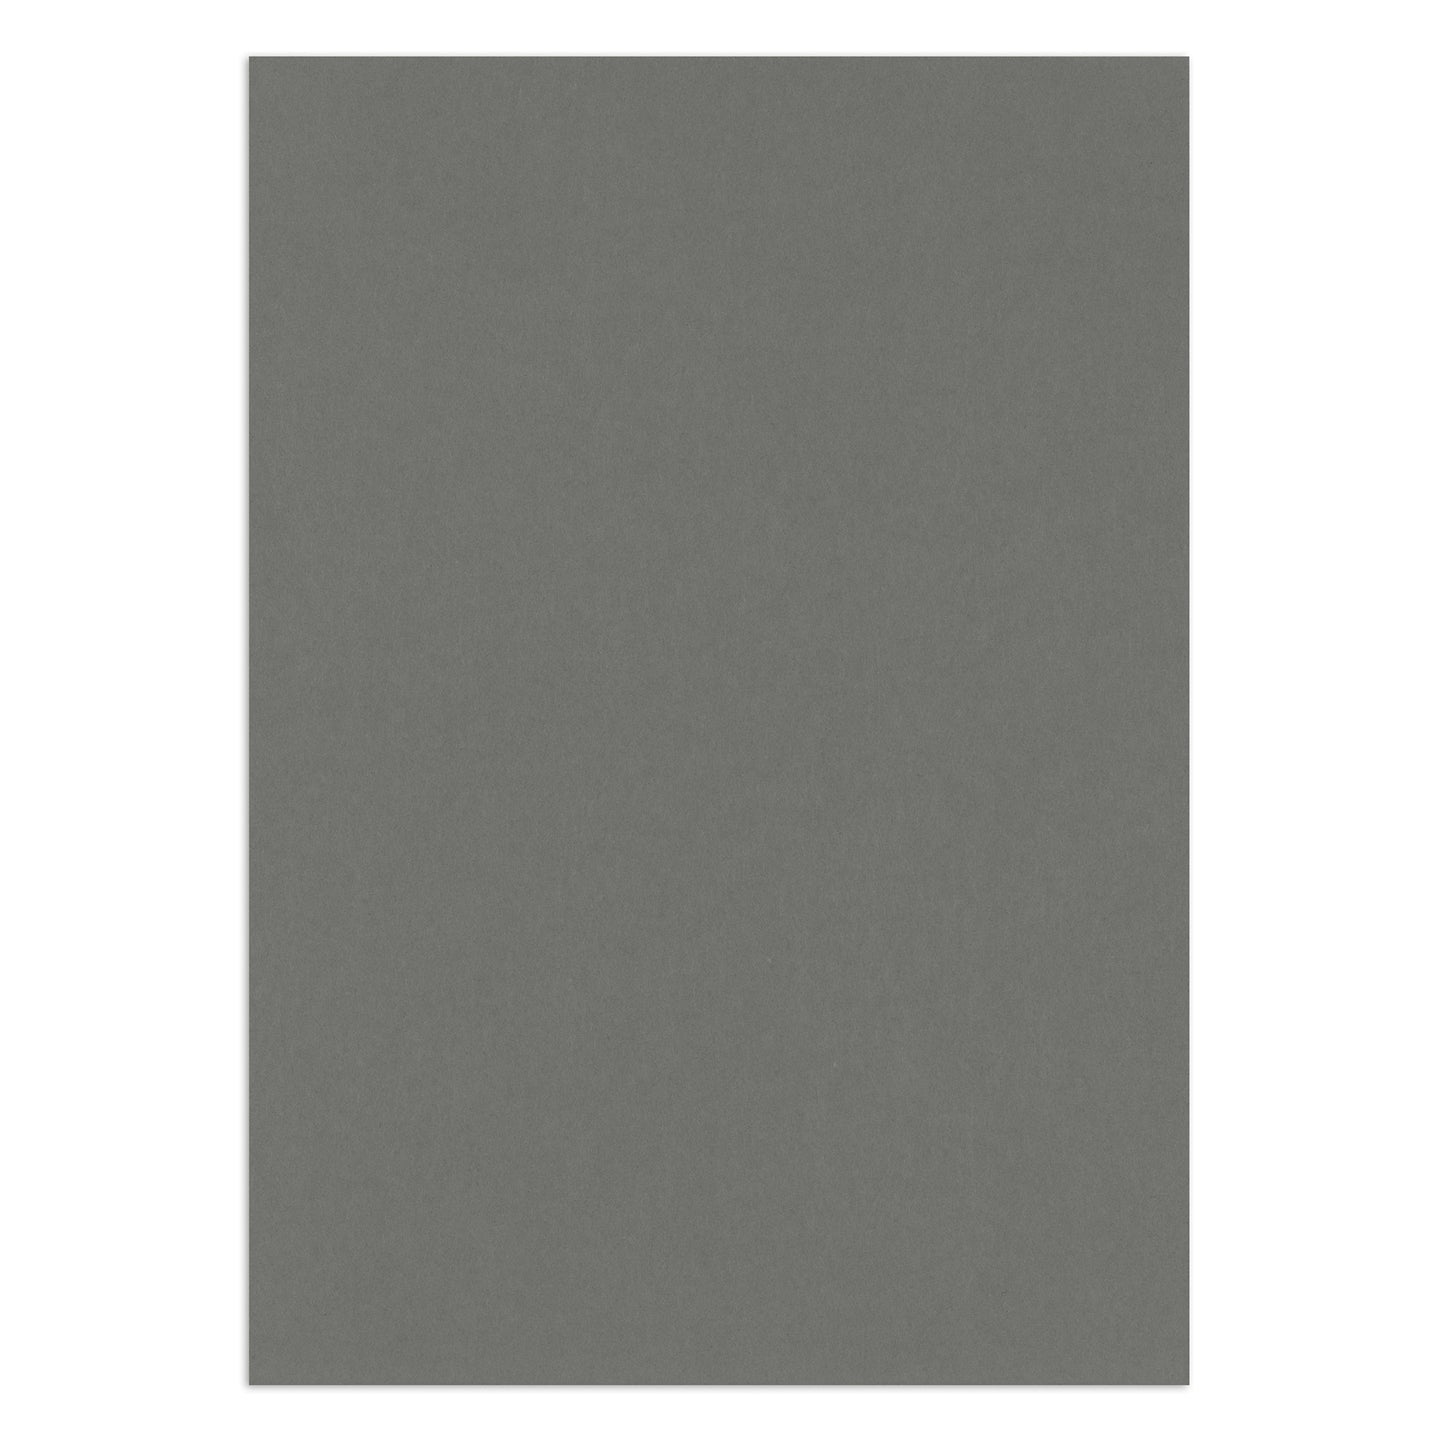 Olin Colours Urban Grey, A3 120g